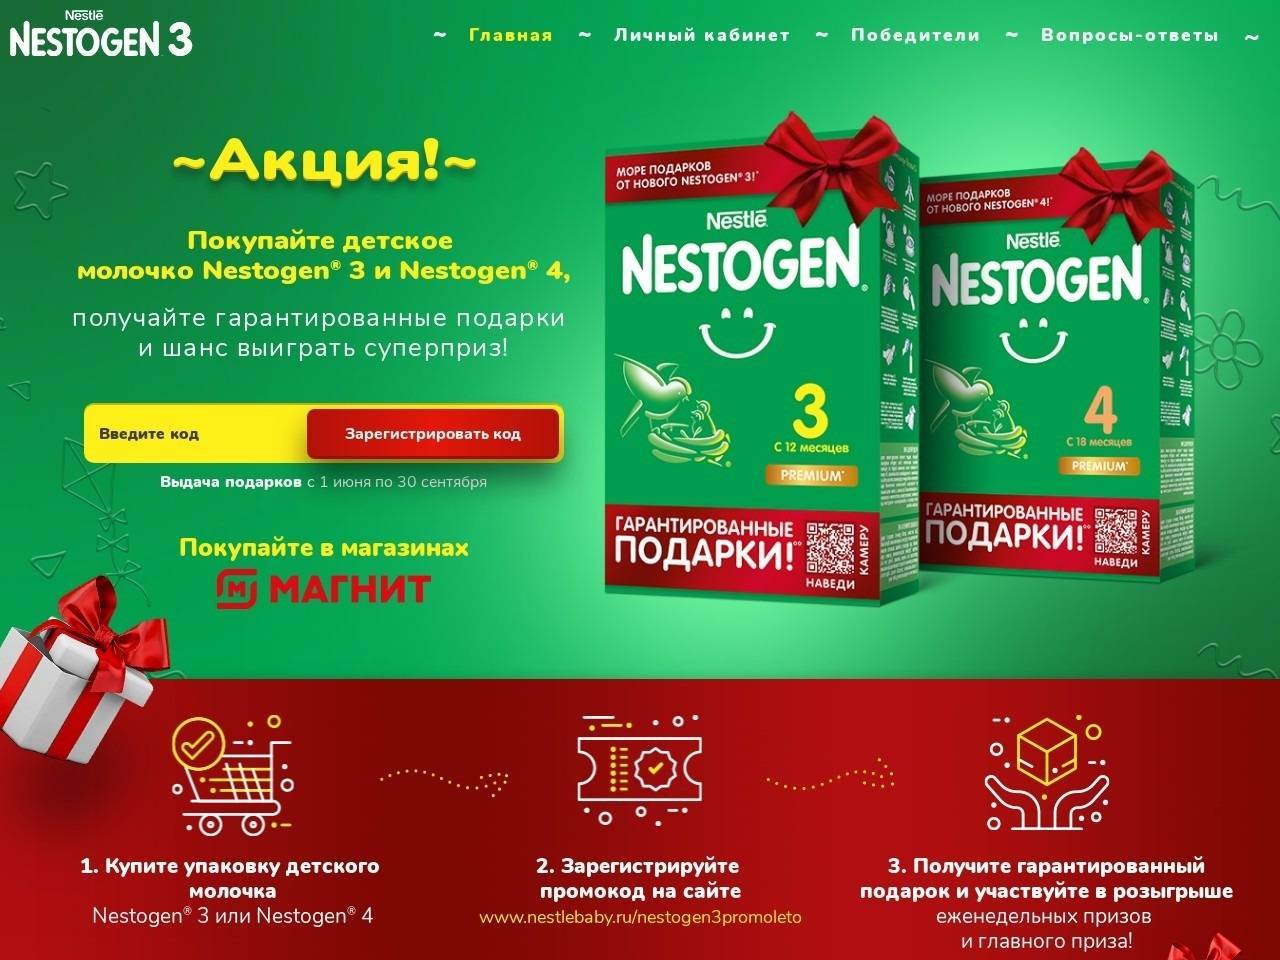 www.nestlebaby.ru/nestogen3promoleto регистрация